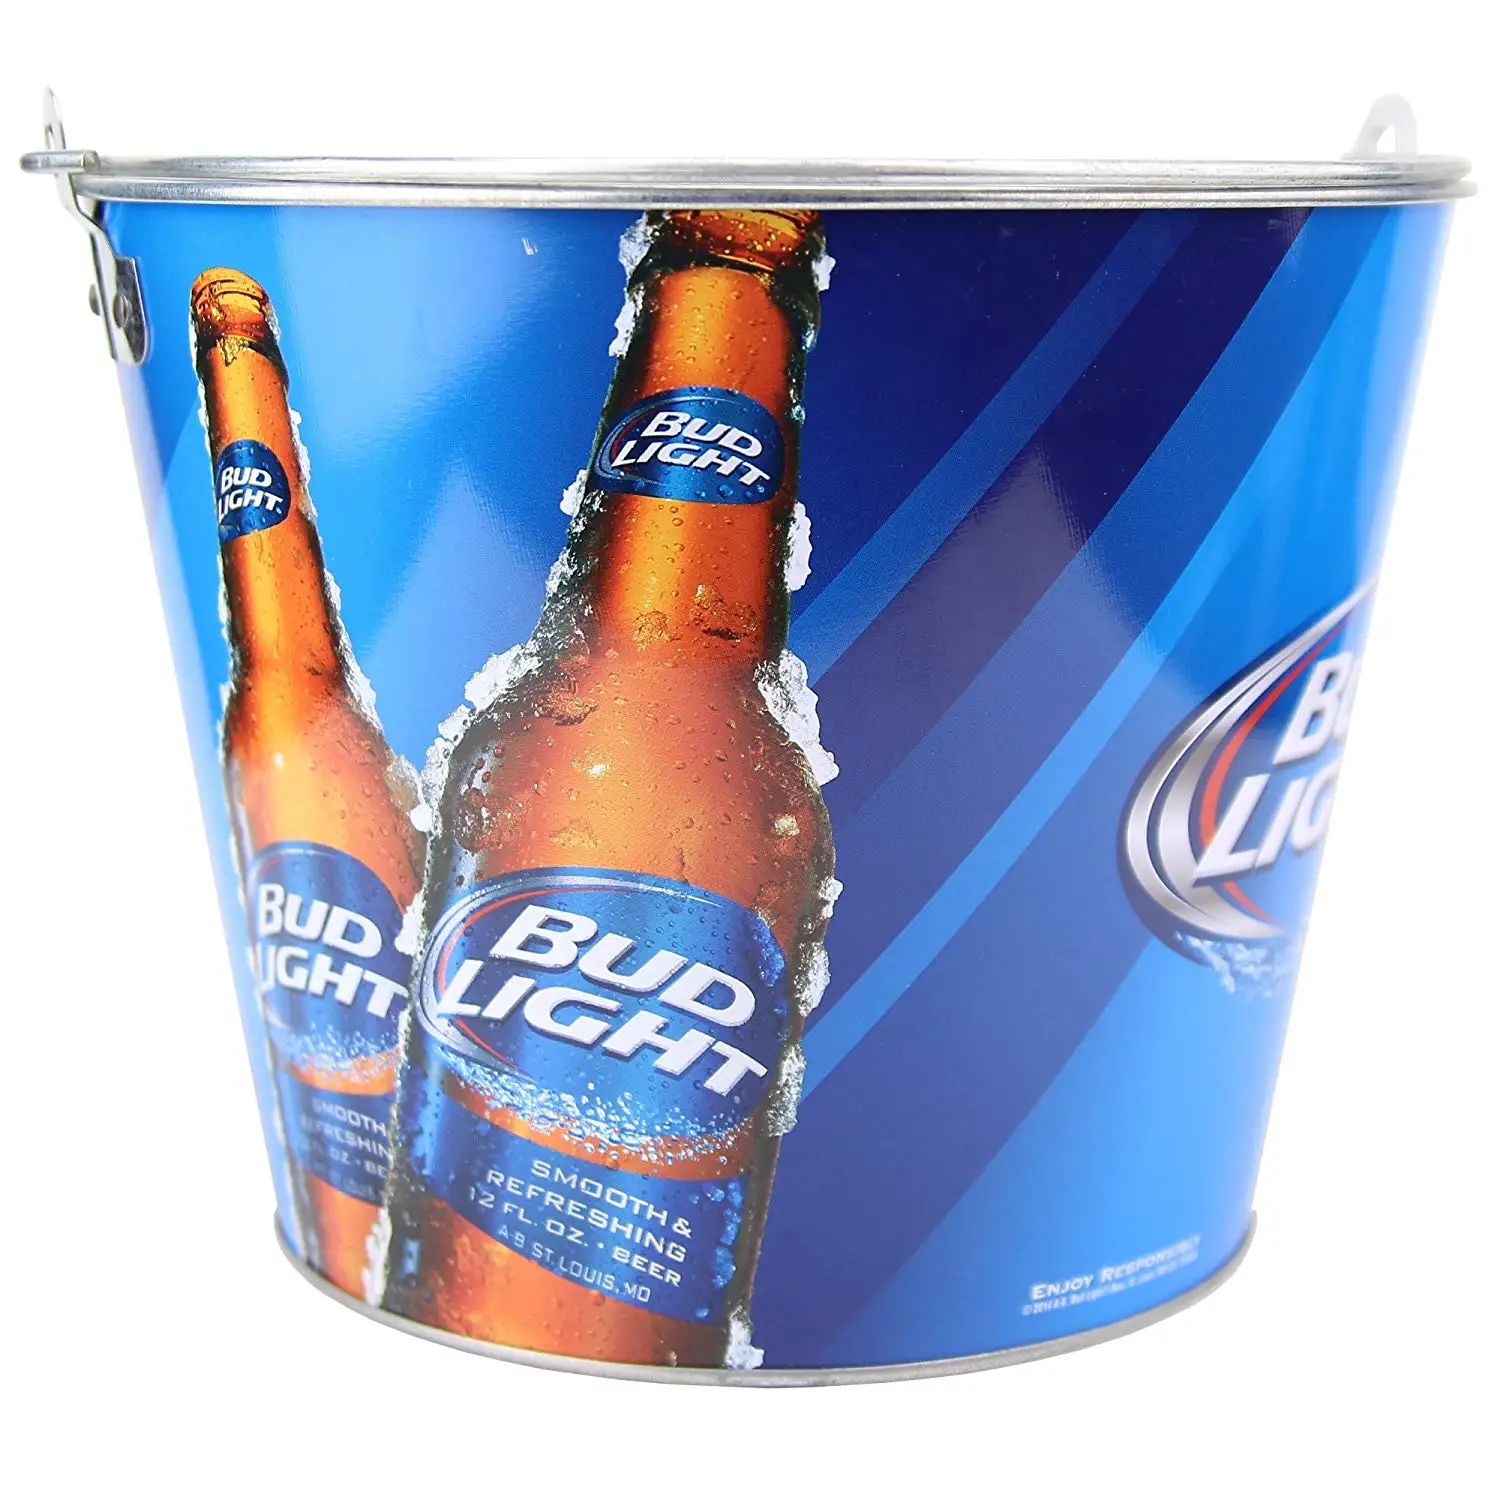 malibu beer beer bucket with red stripe bottle opener..free shipping 